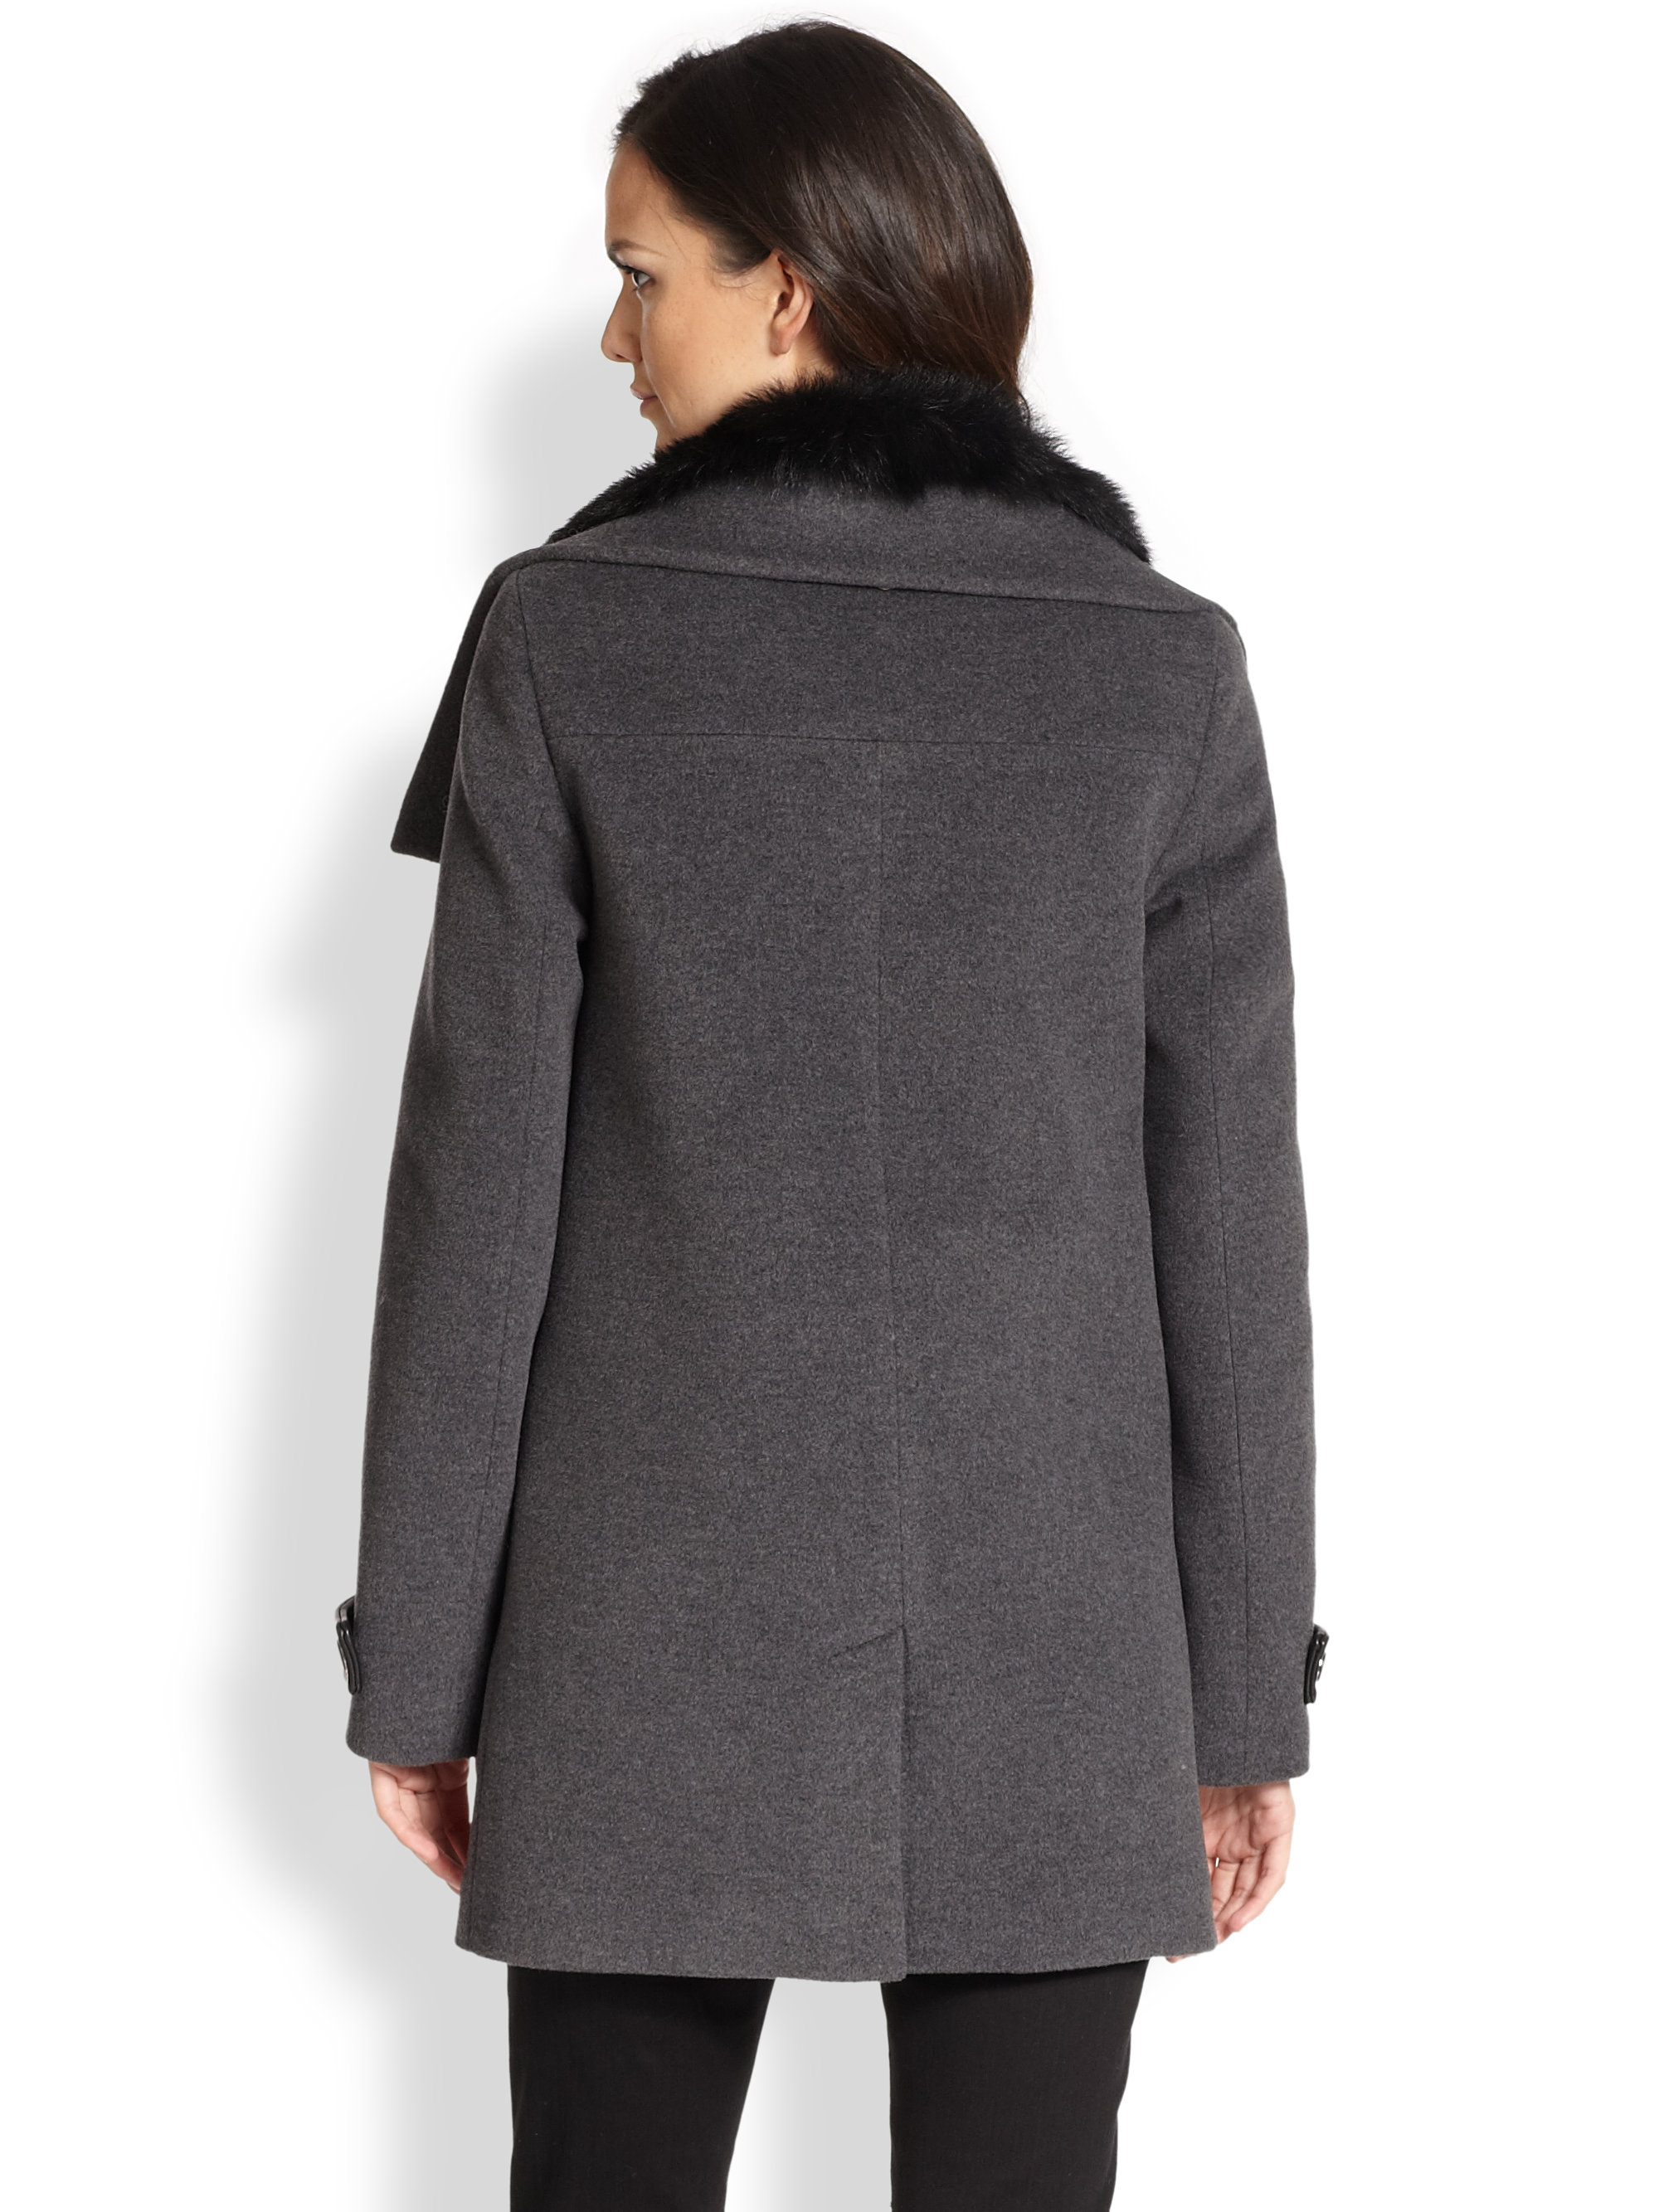 Lyst - Mackage Joy Furcollared Coat in Gray